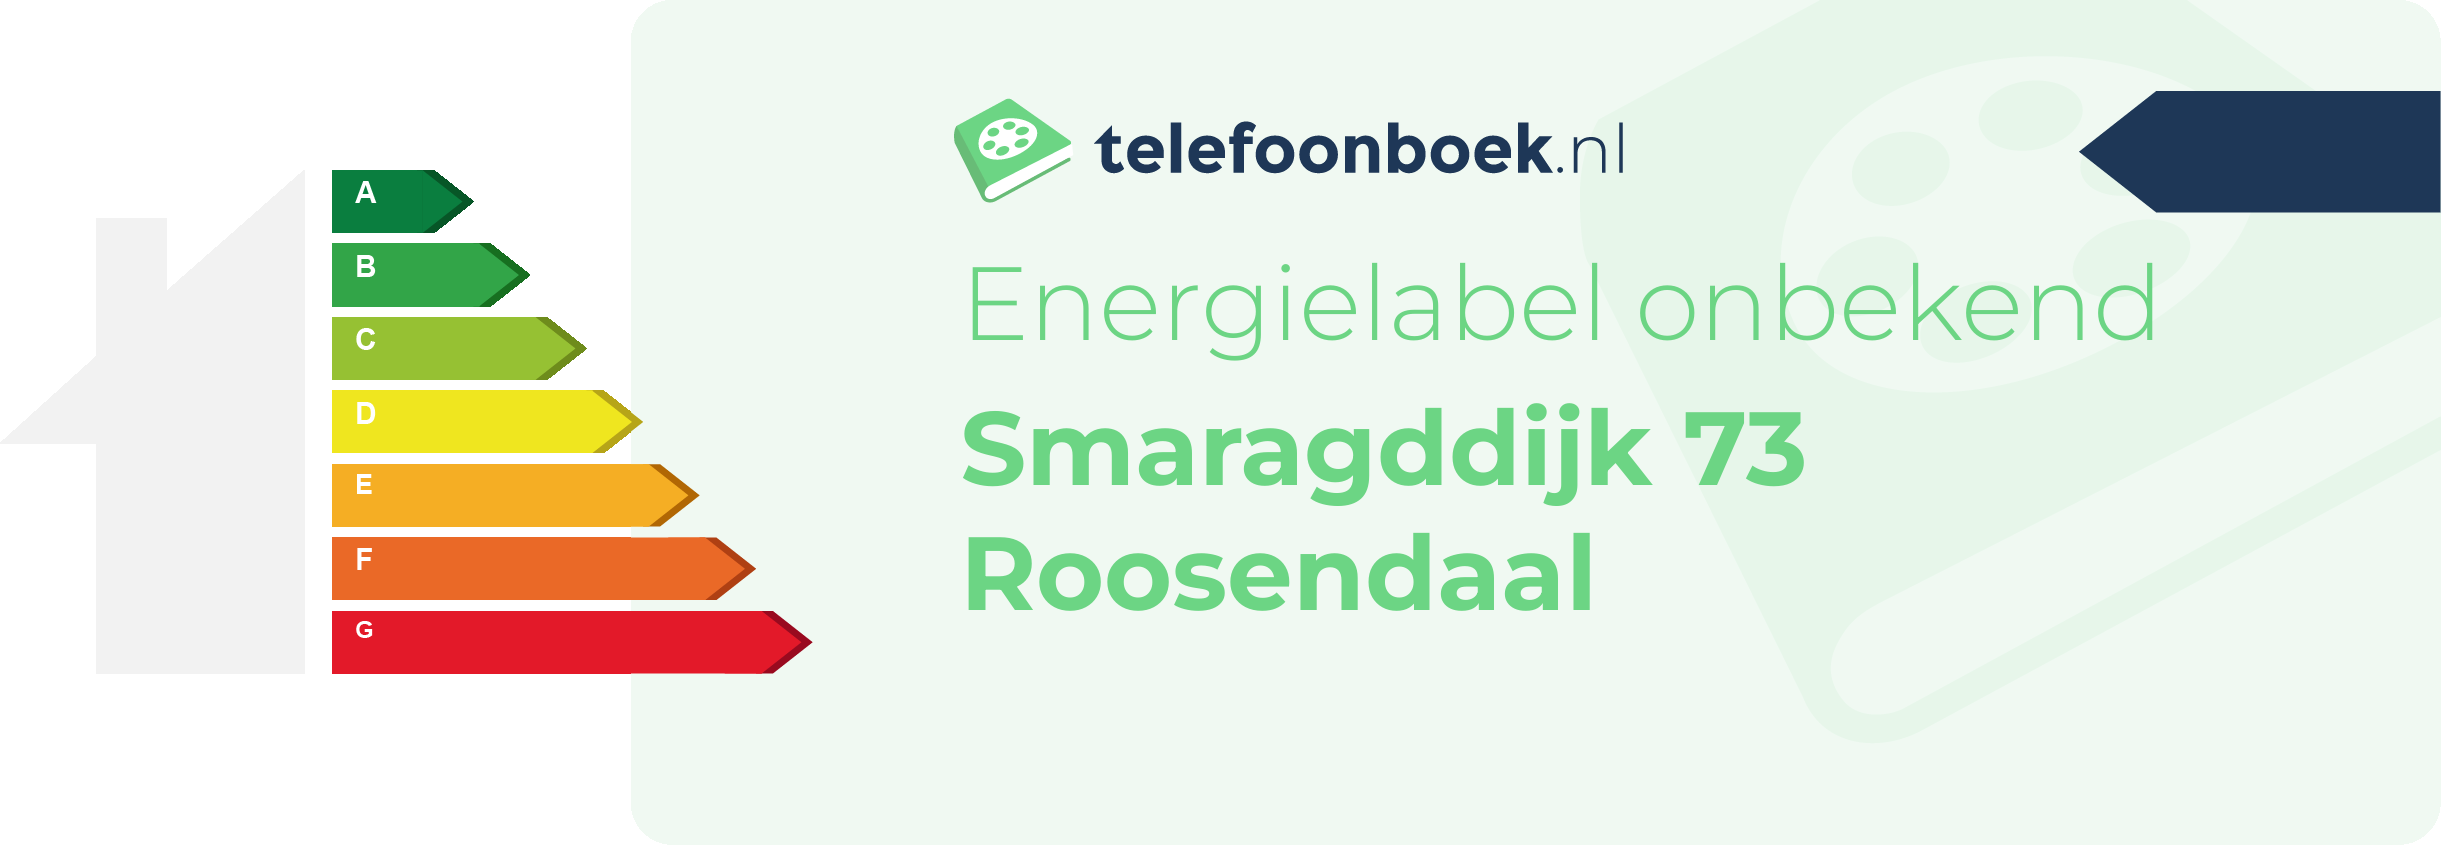 Energielabel Smaragddijk 73 Roosendaal